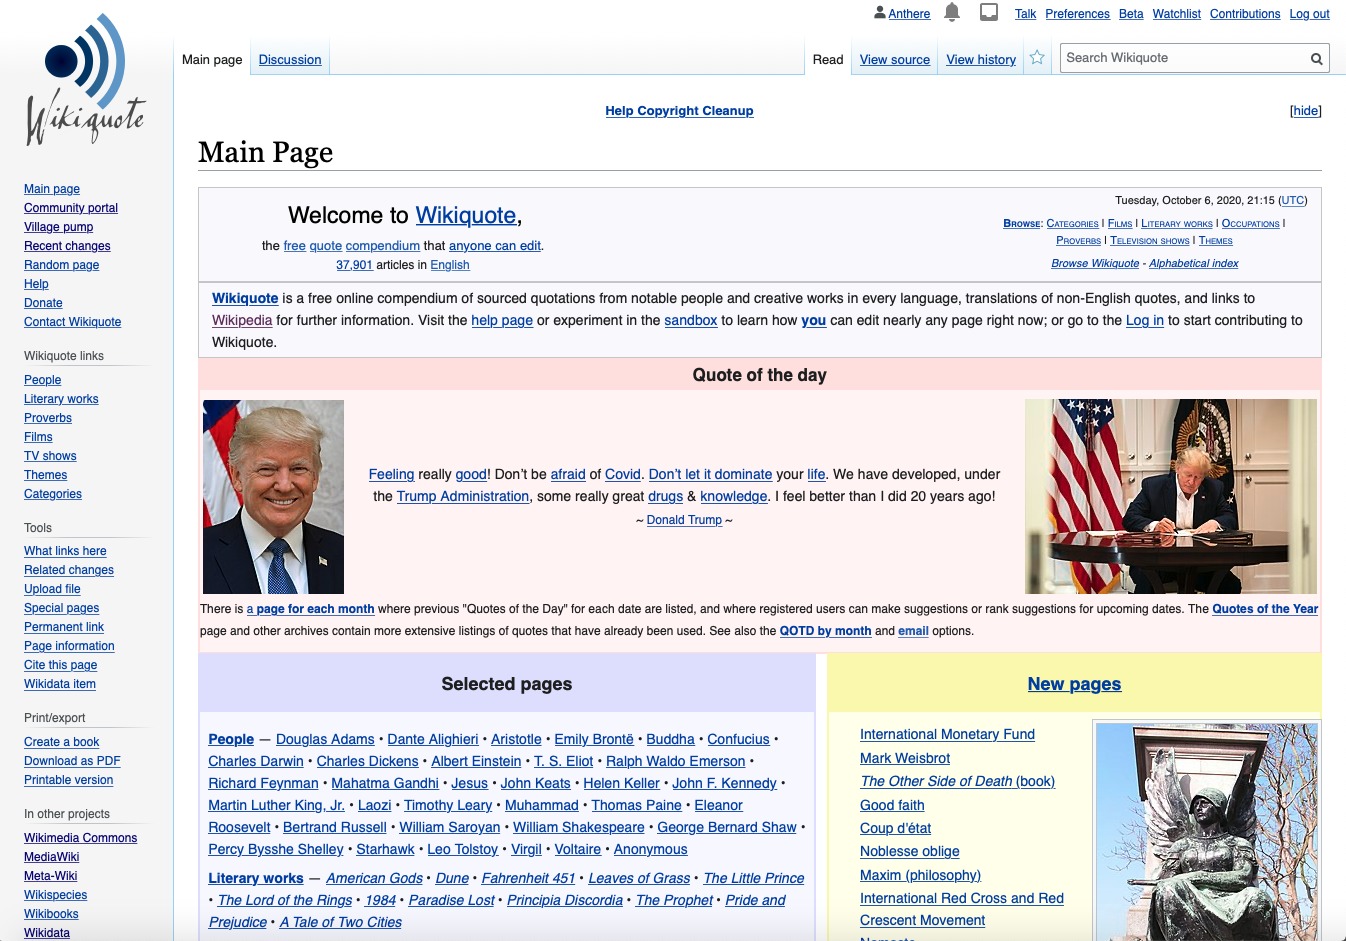 Donald Trump - Wikiquote